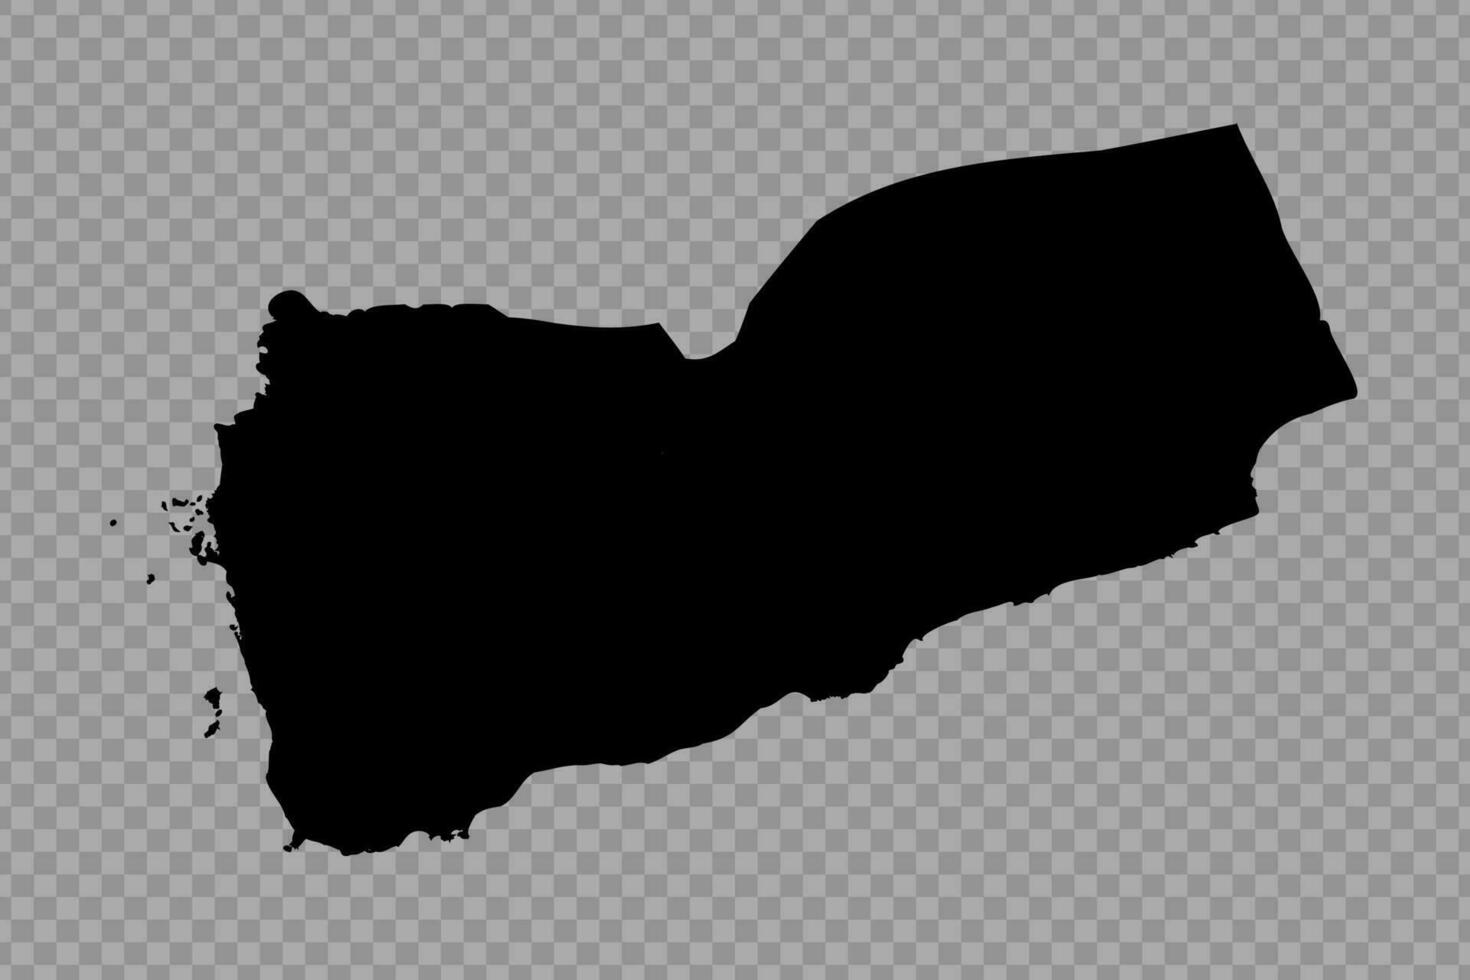 Transparent Background Yemen Simple map vector